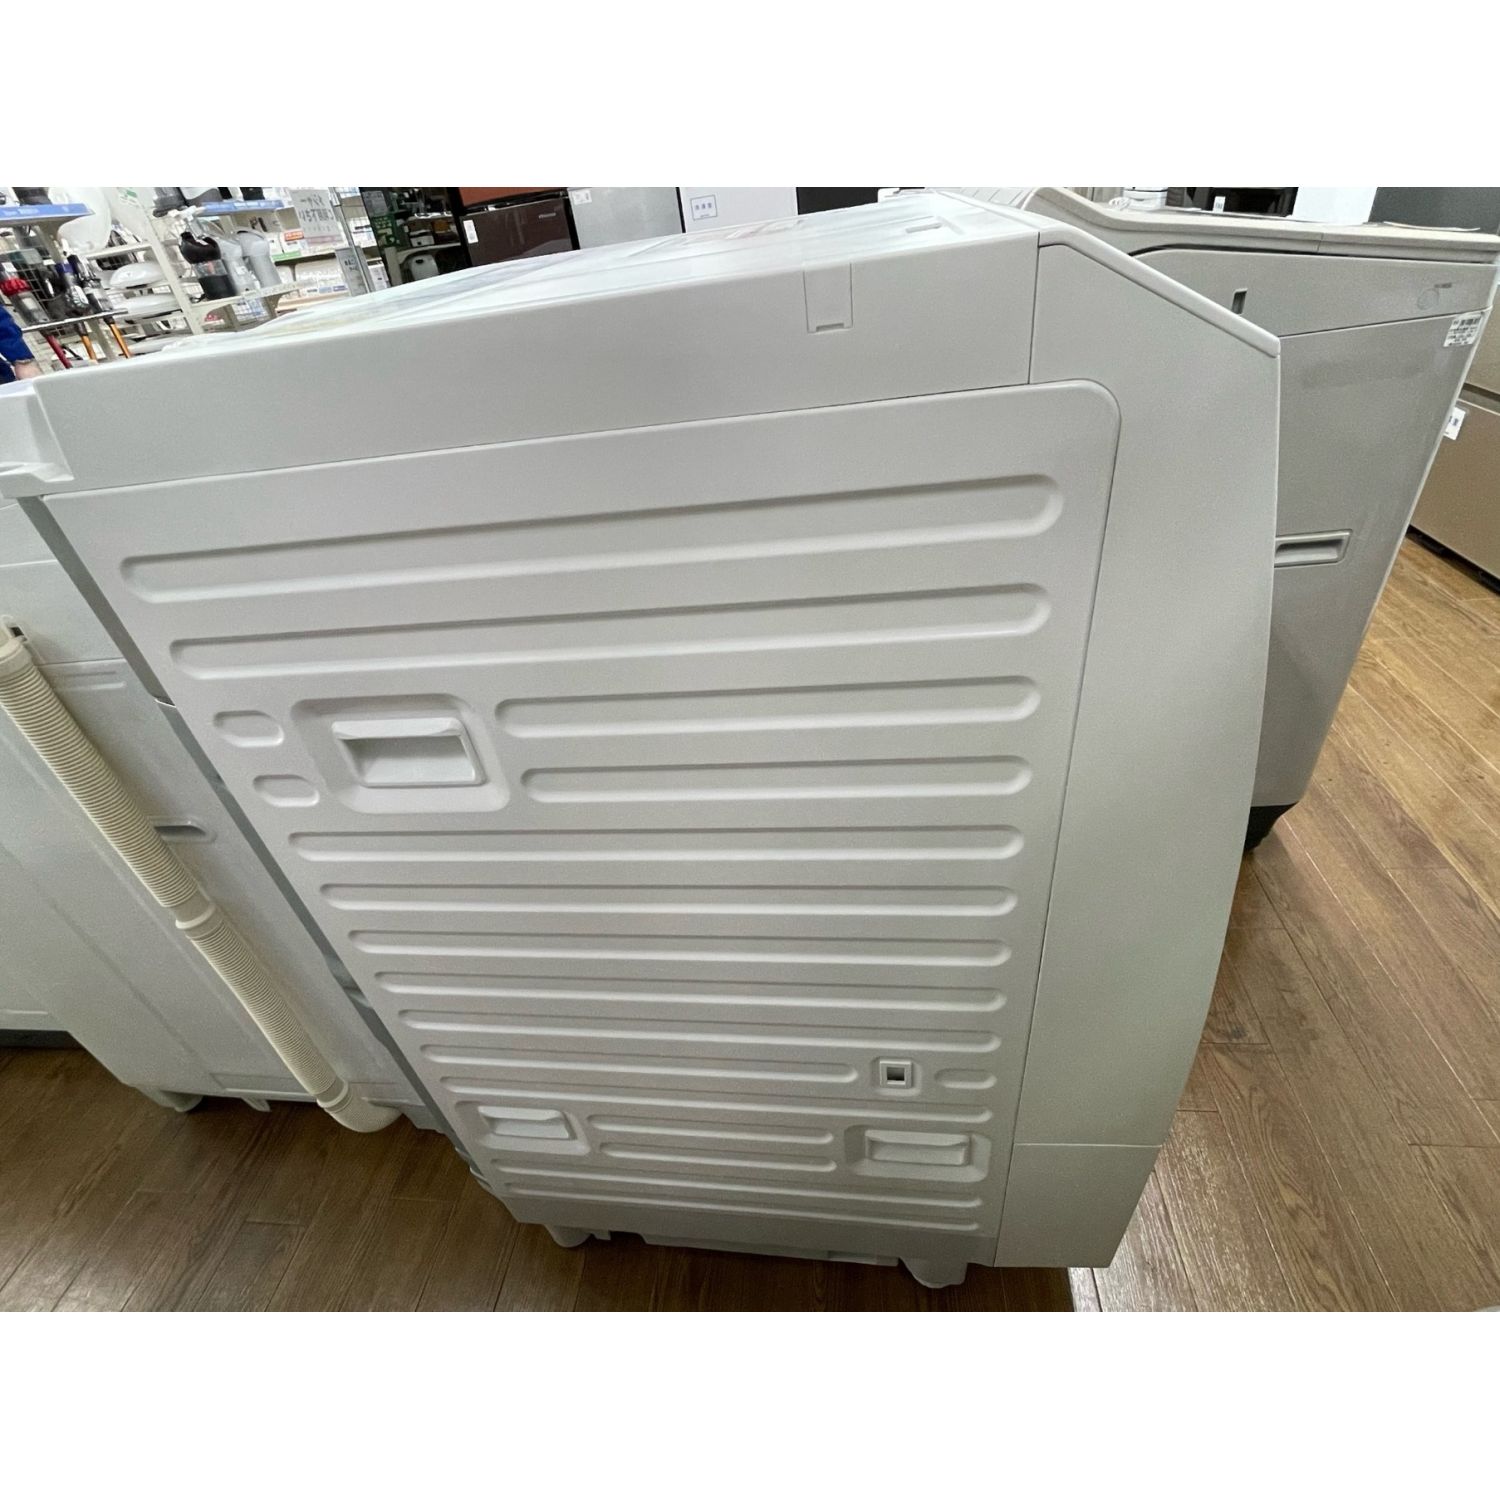 Panasonic (パナソニック) ドラム式洗濯乾燥機 12.0kg 6.0㎏ NA 